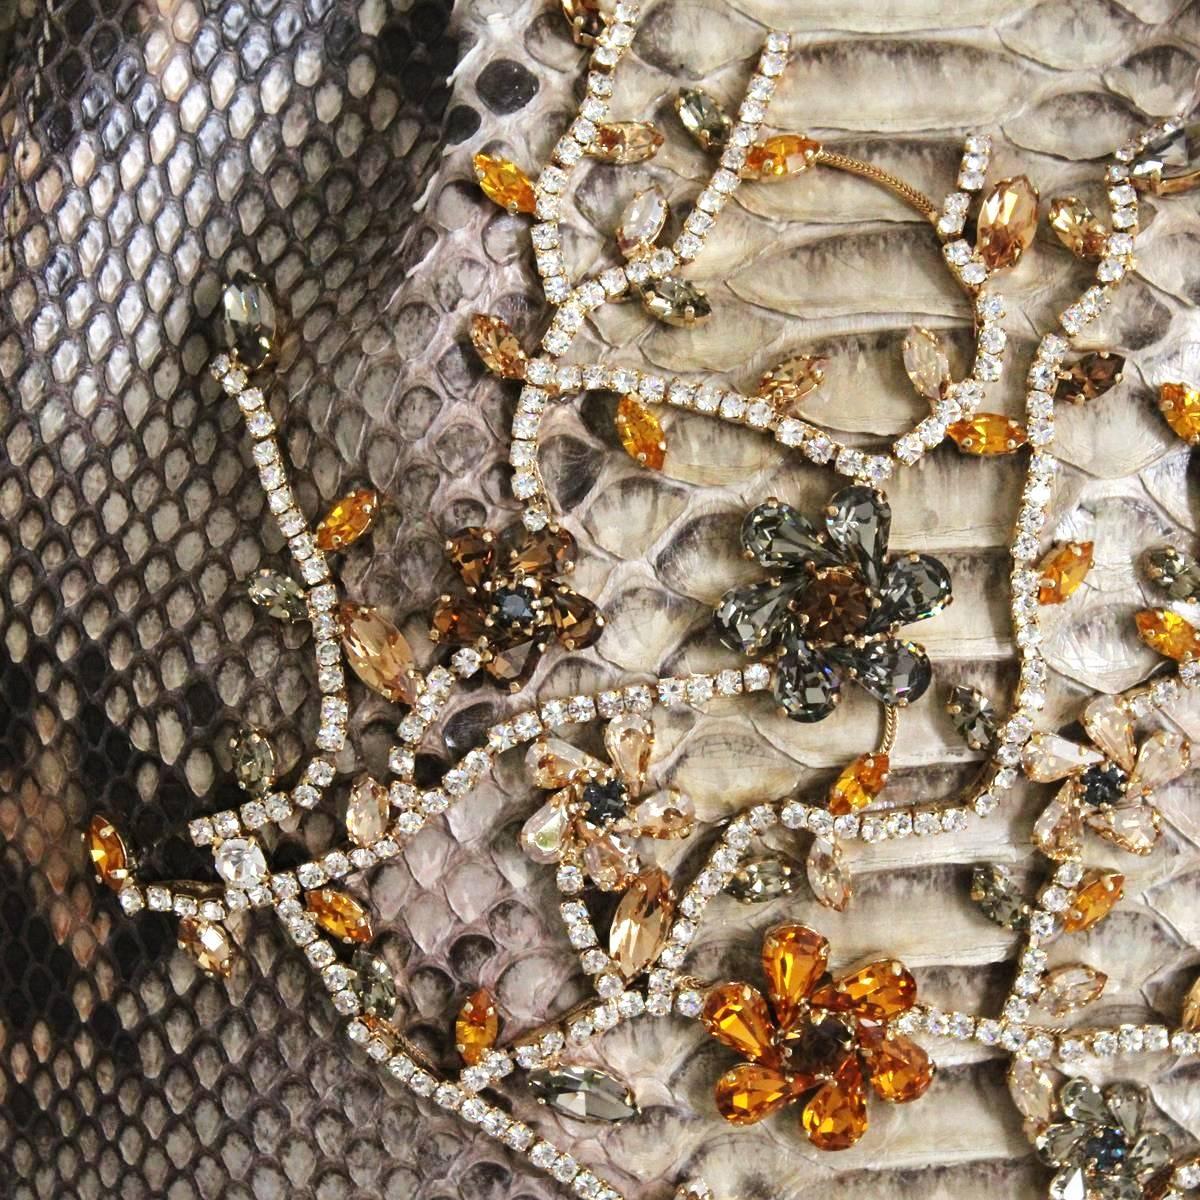 Women's Ghiblie, Firenze Jewel python bag